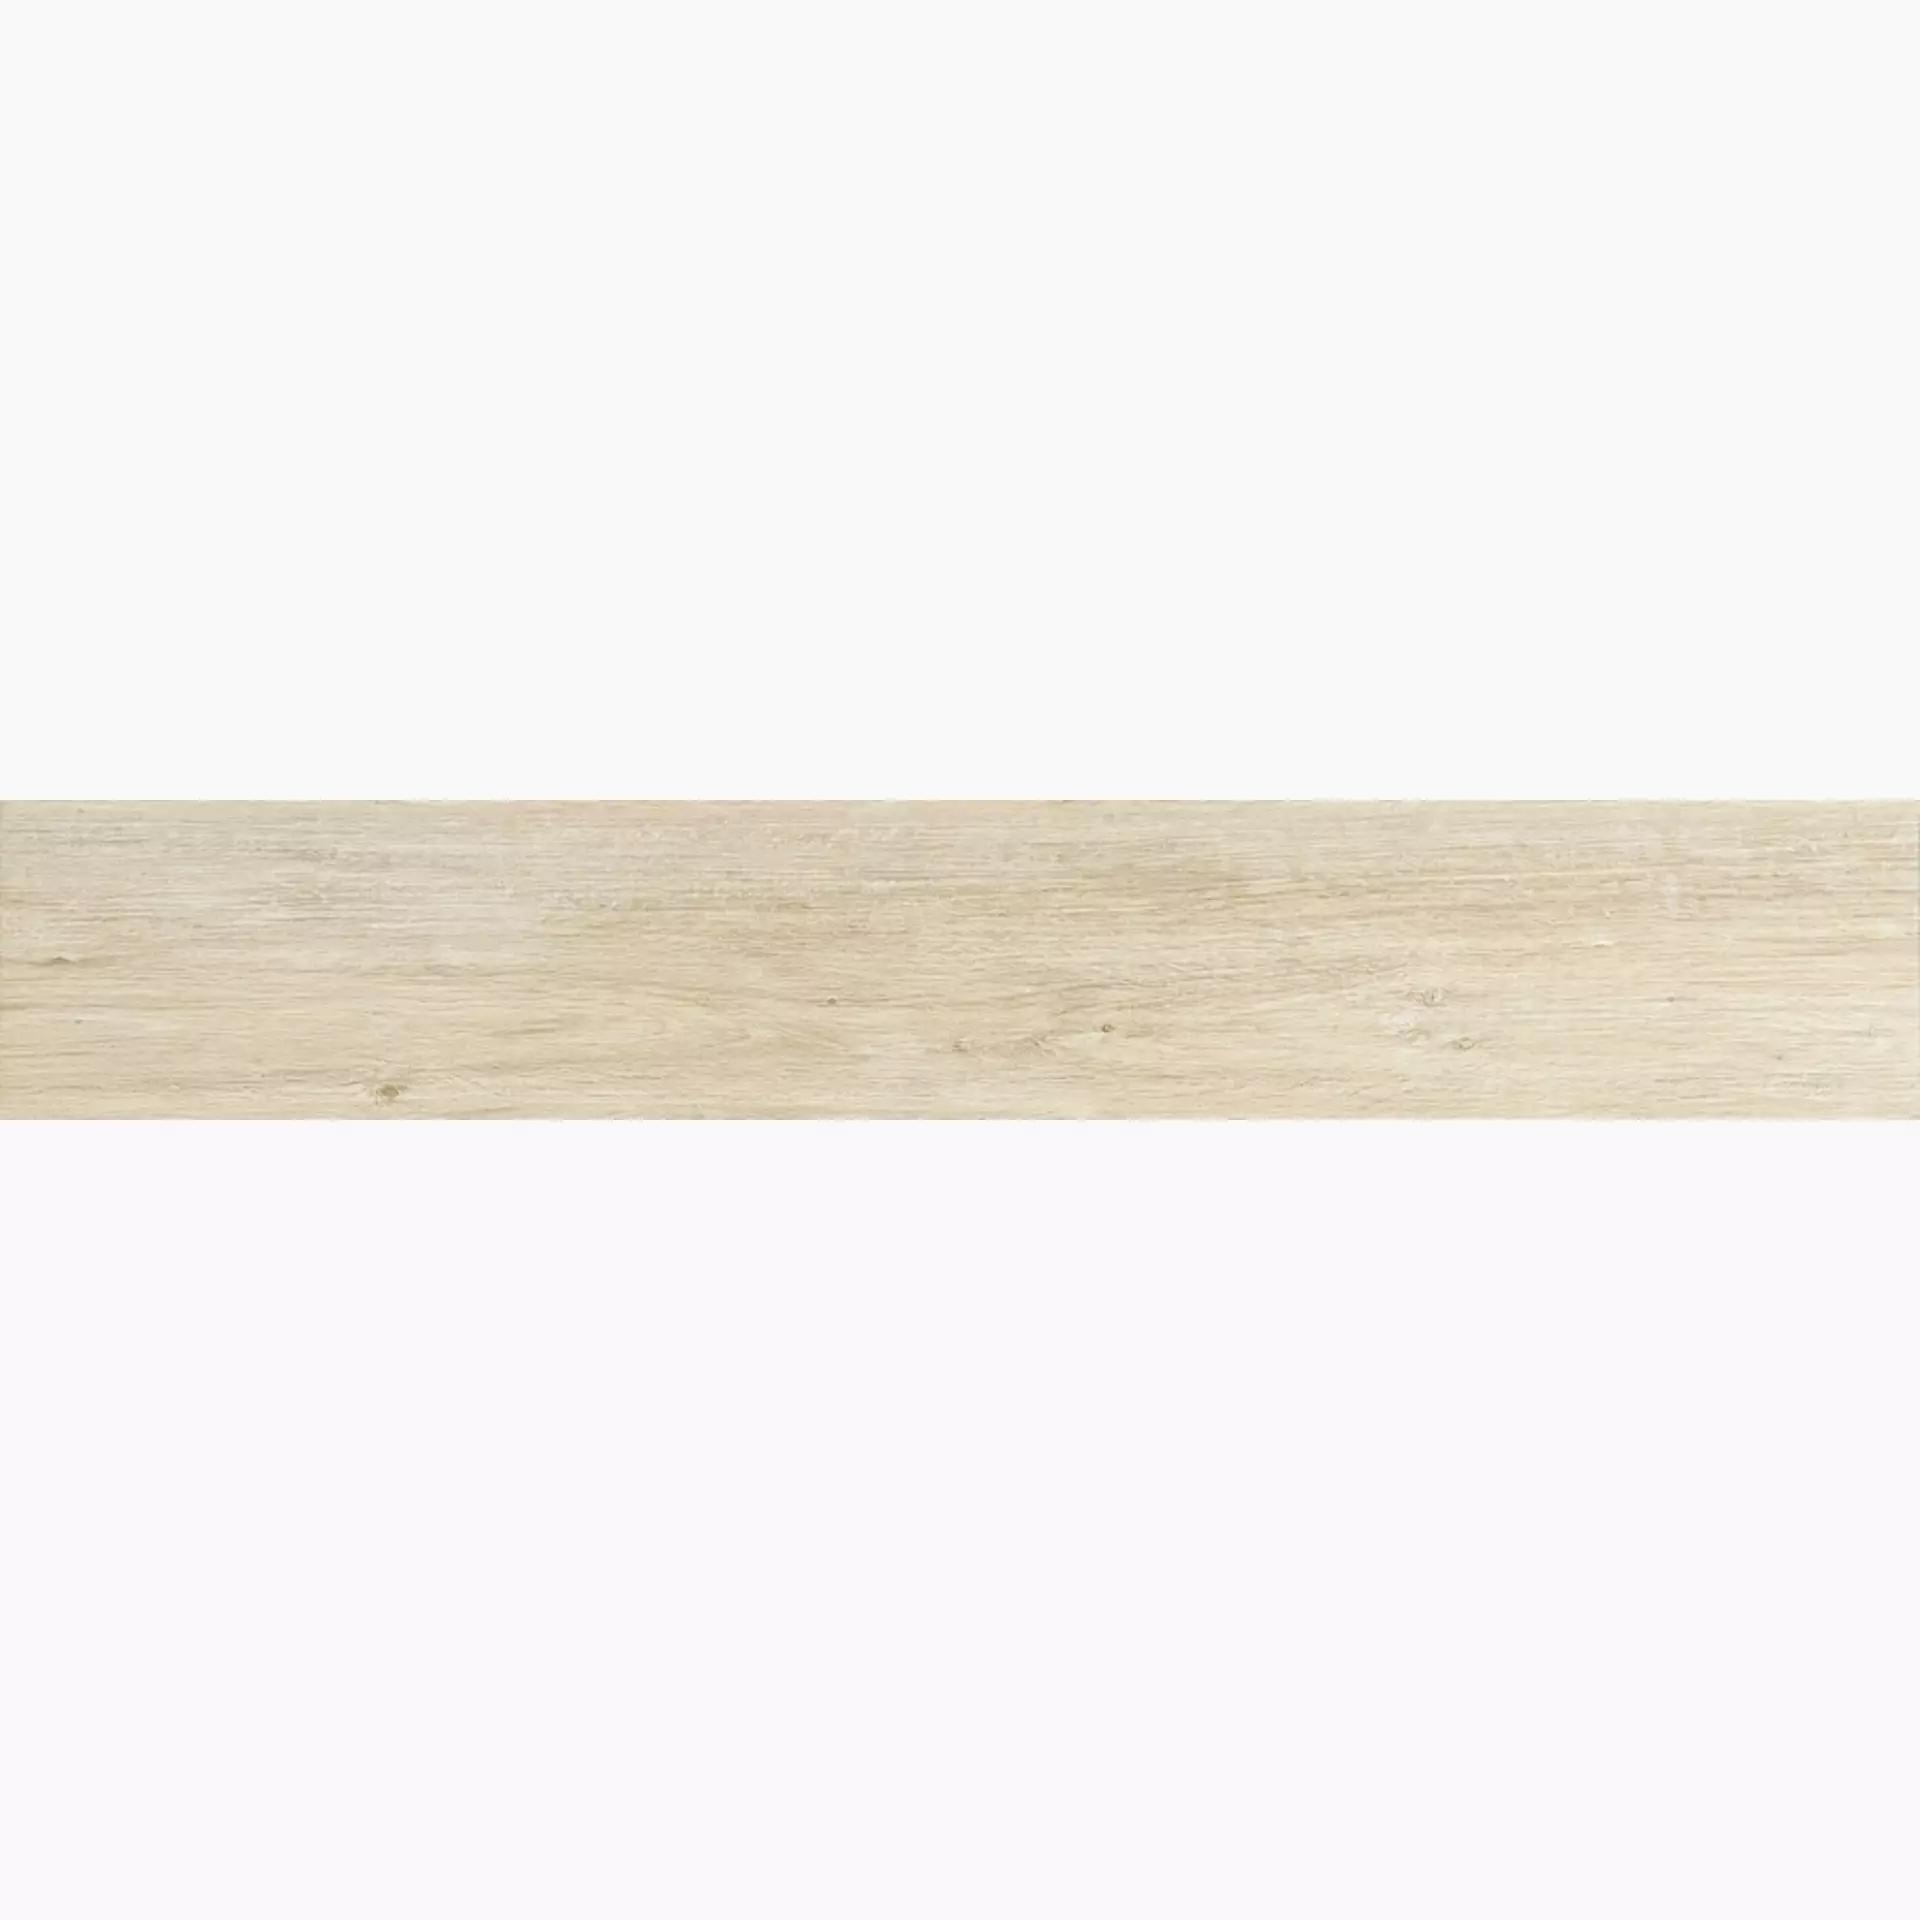 Iris E-Wood White Lappato Vintage 894024 15x90cm 9mm